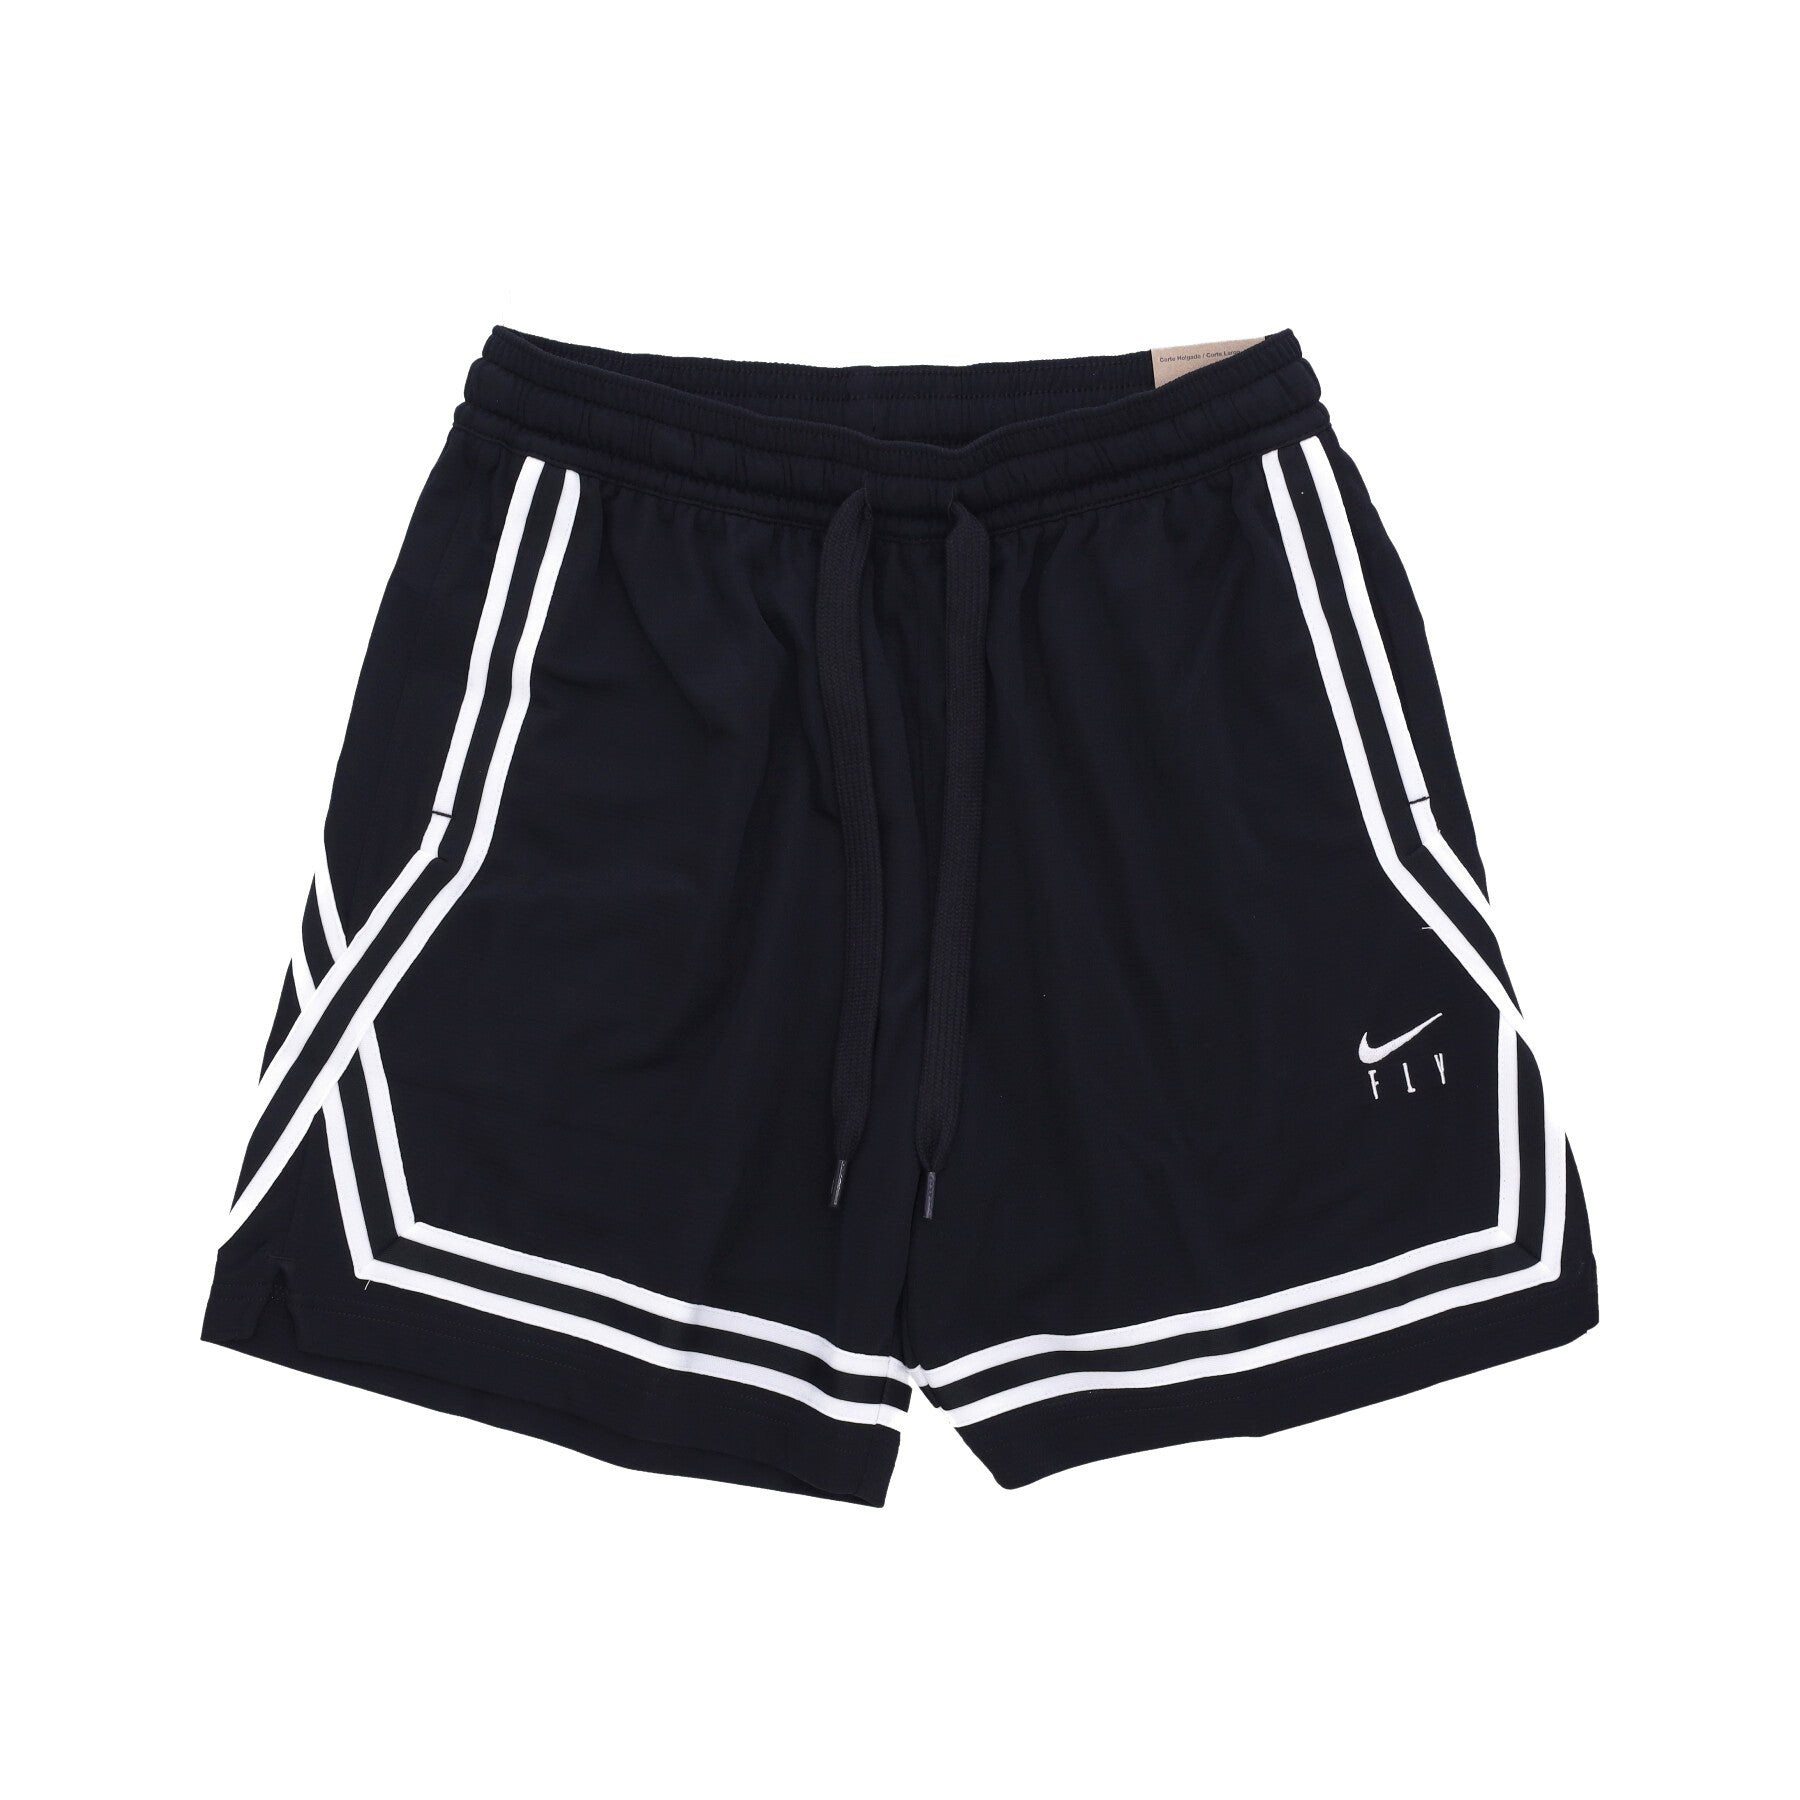 Nike, Pantaloncino Tipo Basket Donna Fly Crossover Basketball Short, Black/white